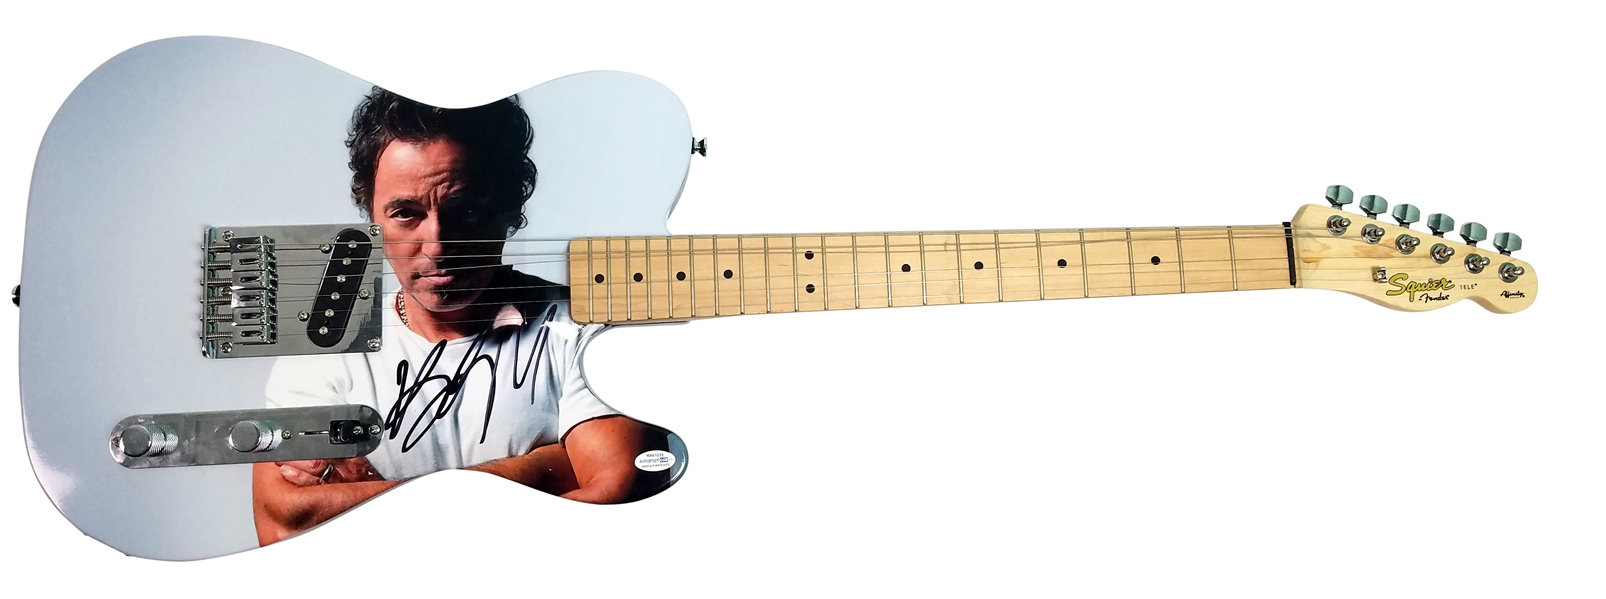 Bruce Springsteen Signed Custom Graphic Fender Squier Telecaster Guitar (ACOA)